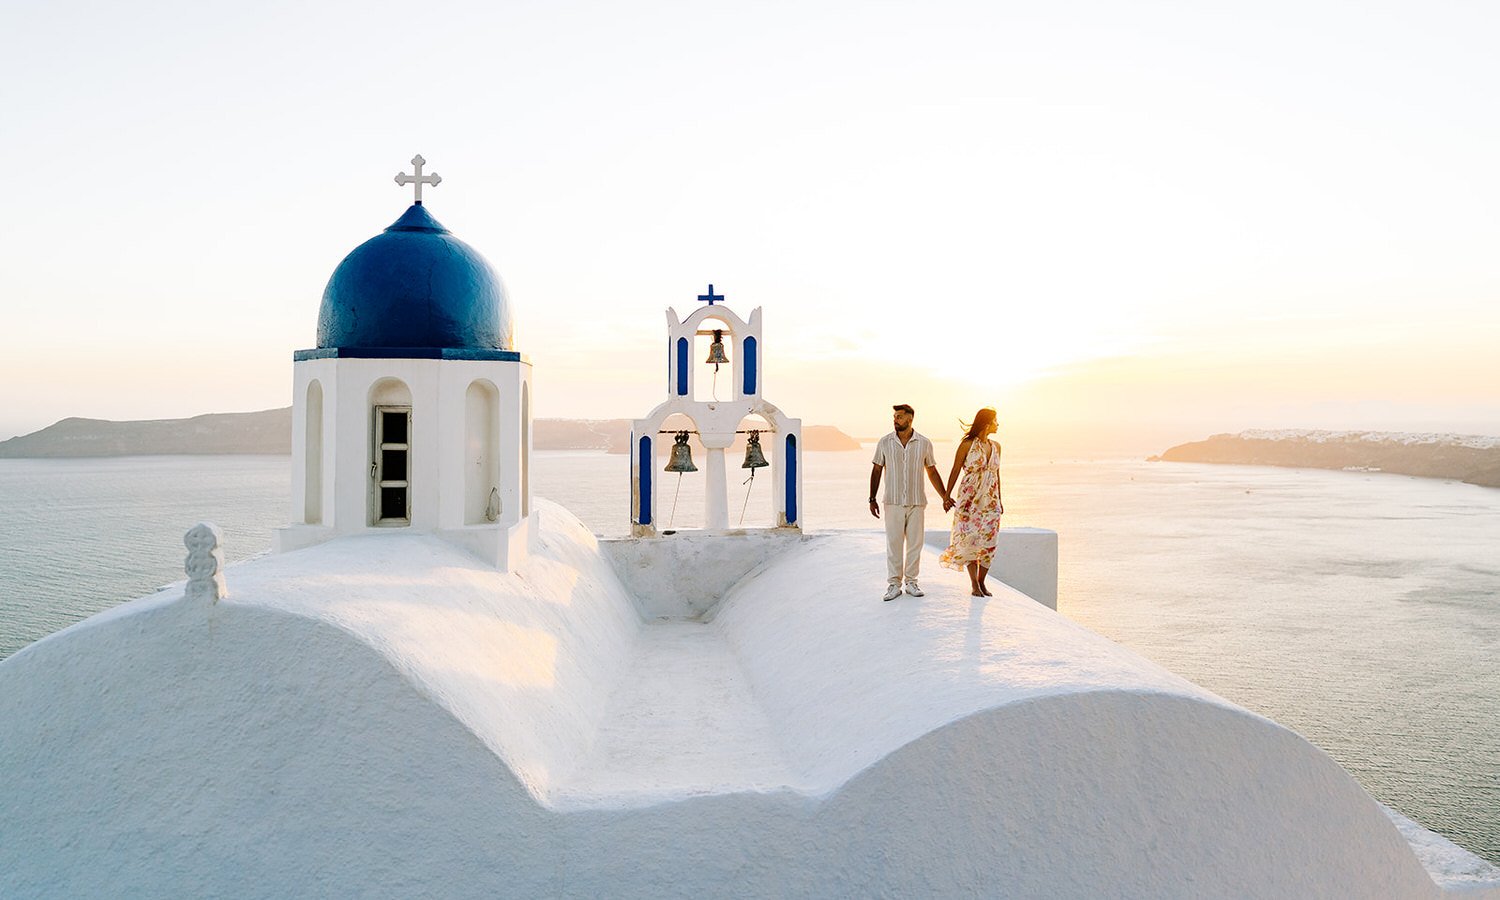 Sunset-Engagement-Photoshoot-in-Imerovigli-Santorini-Engagement-Photographer